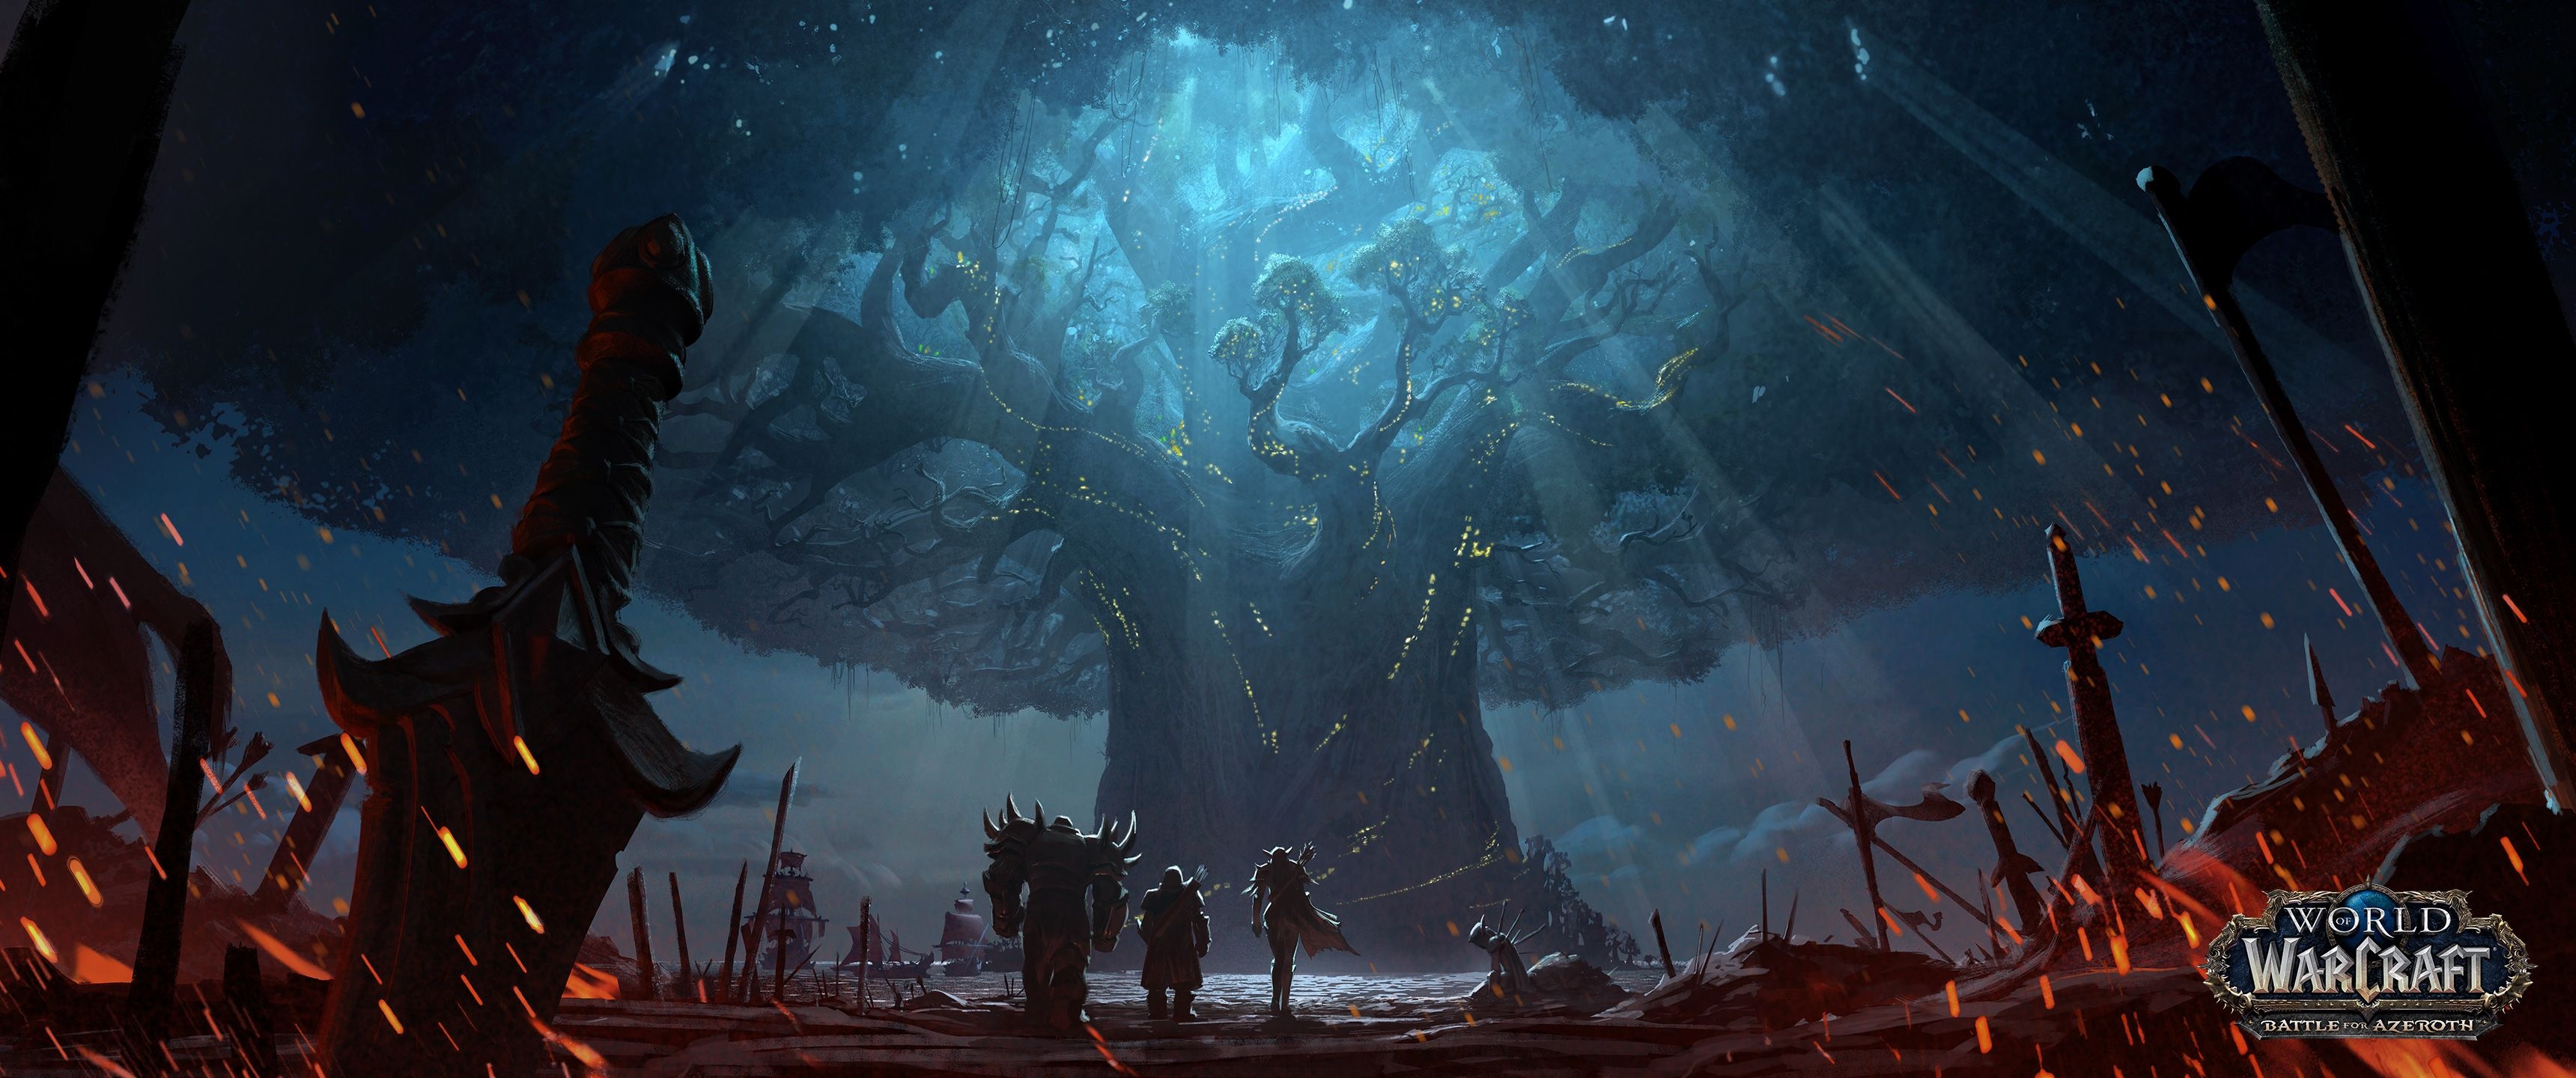 Warcraft universe, Epic landscapes, Legendary battles, Heroic characters, Azeroth adventures, 3440x1440 Dual Screen Desktop